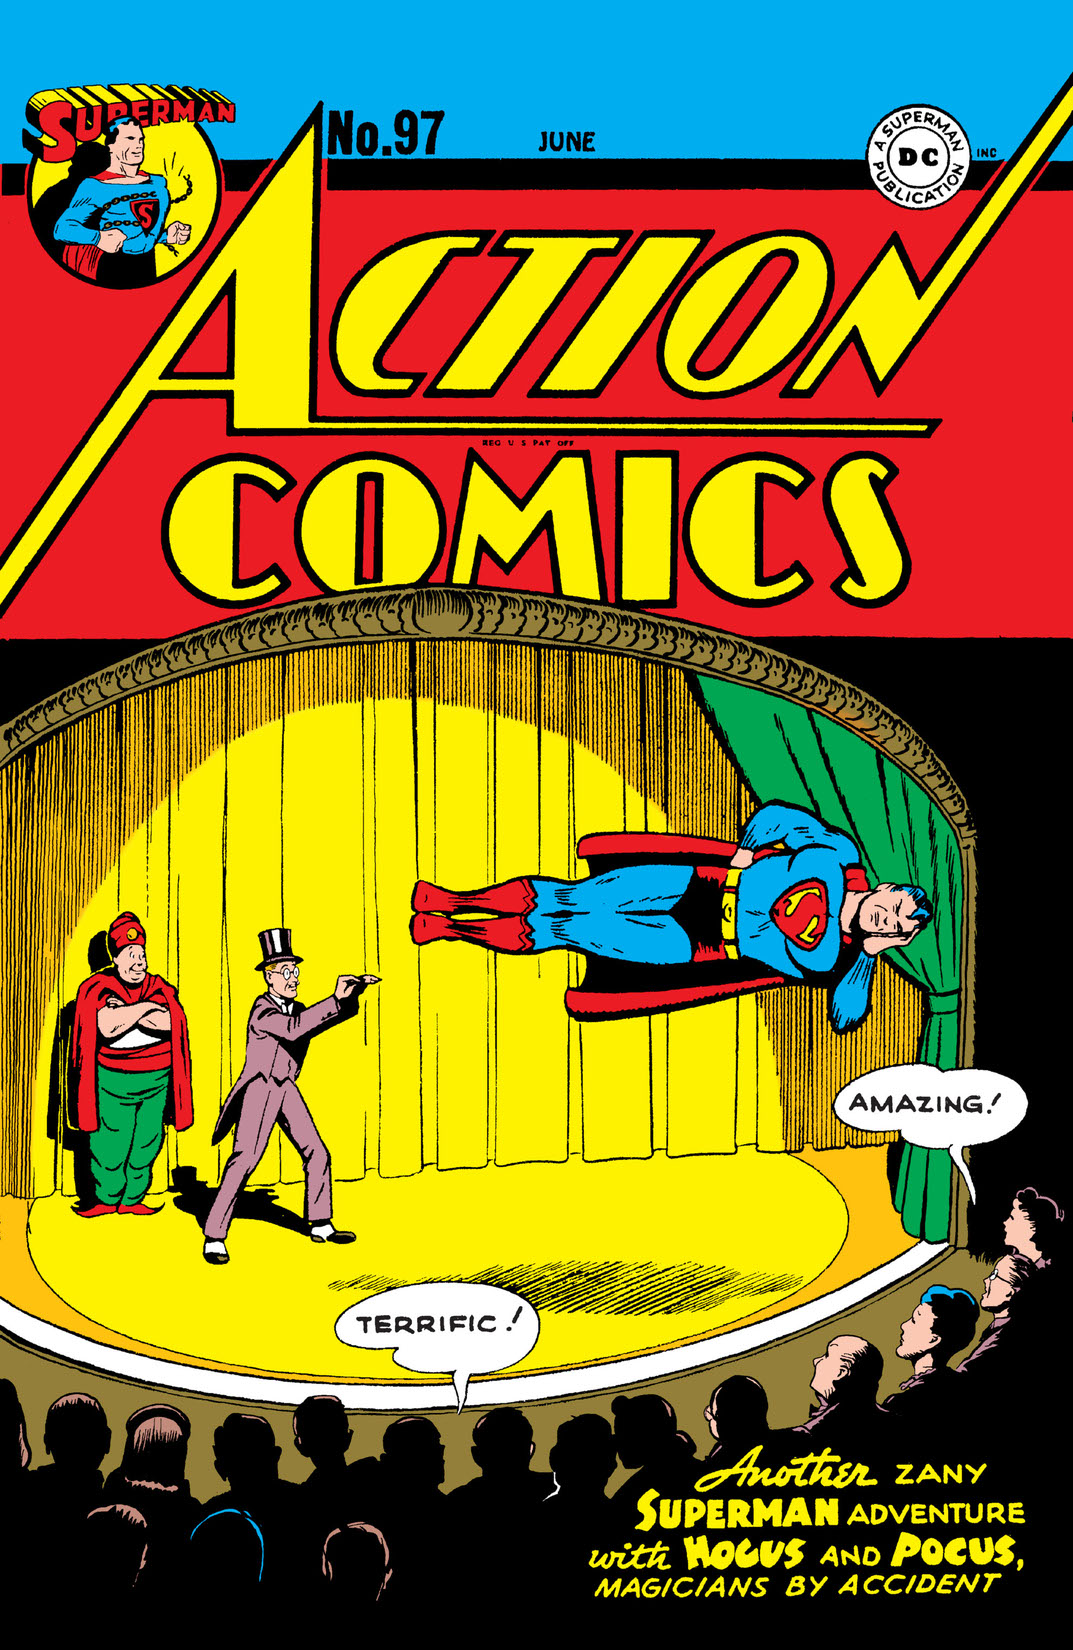 Action Comics (1938-) #97 preview images